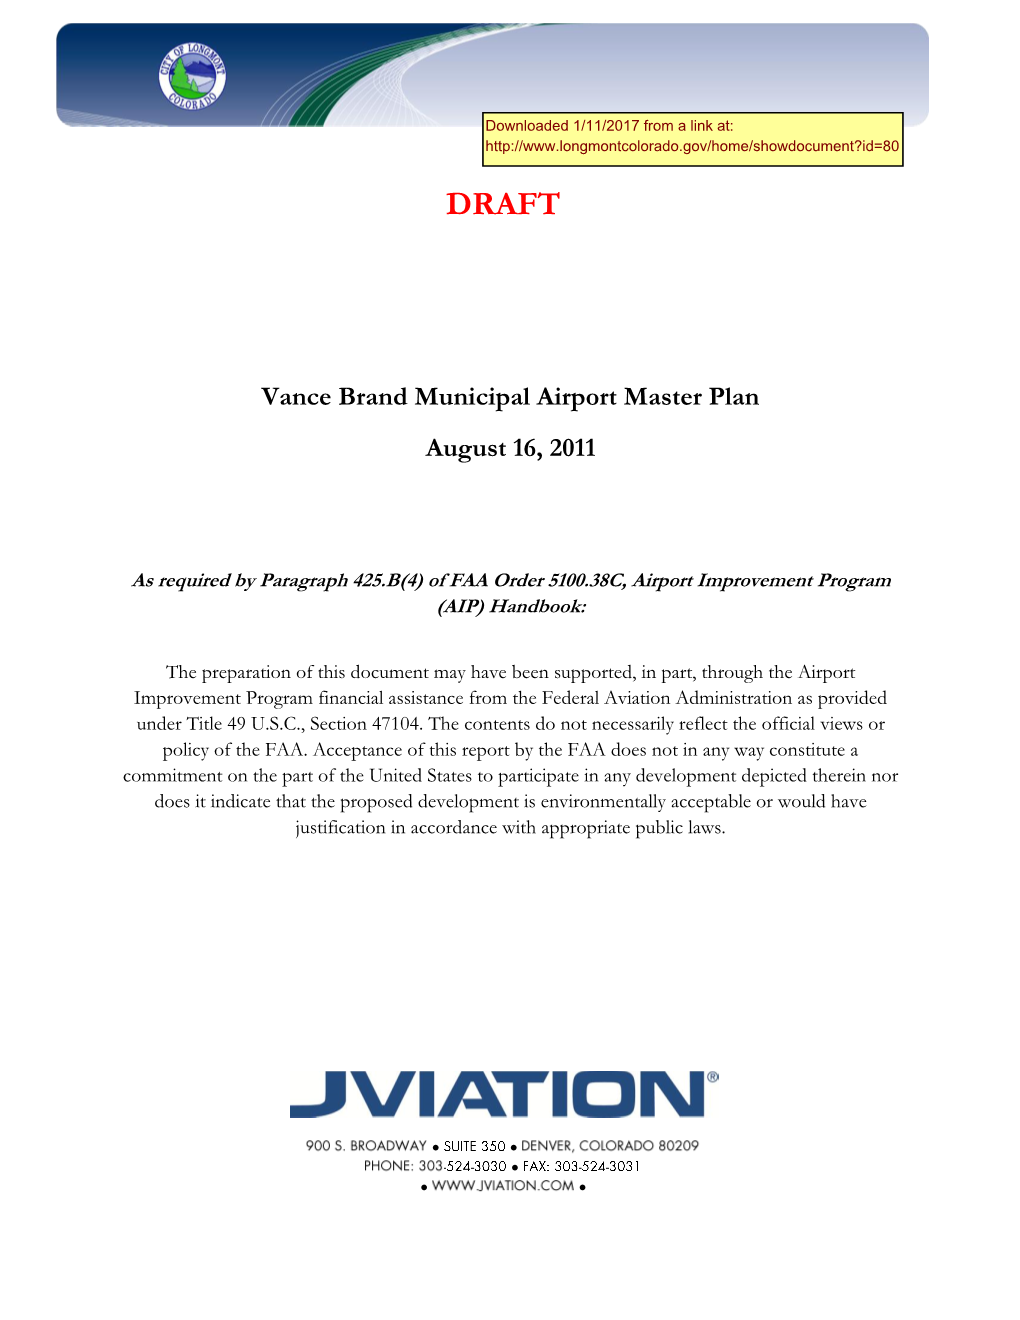 Vance Brand Municipal Airport Master Plan August 16, 2011